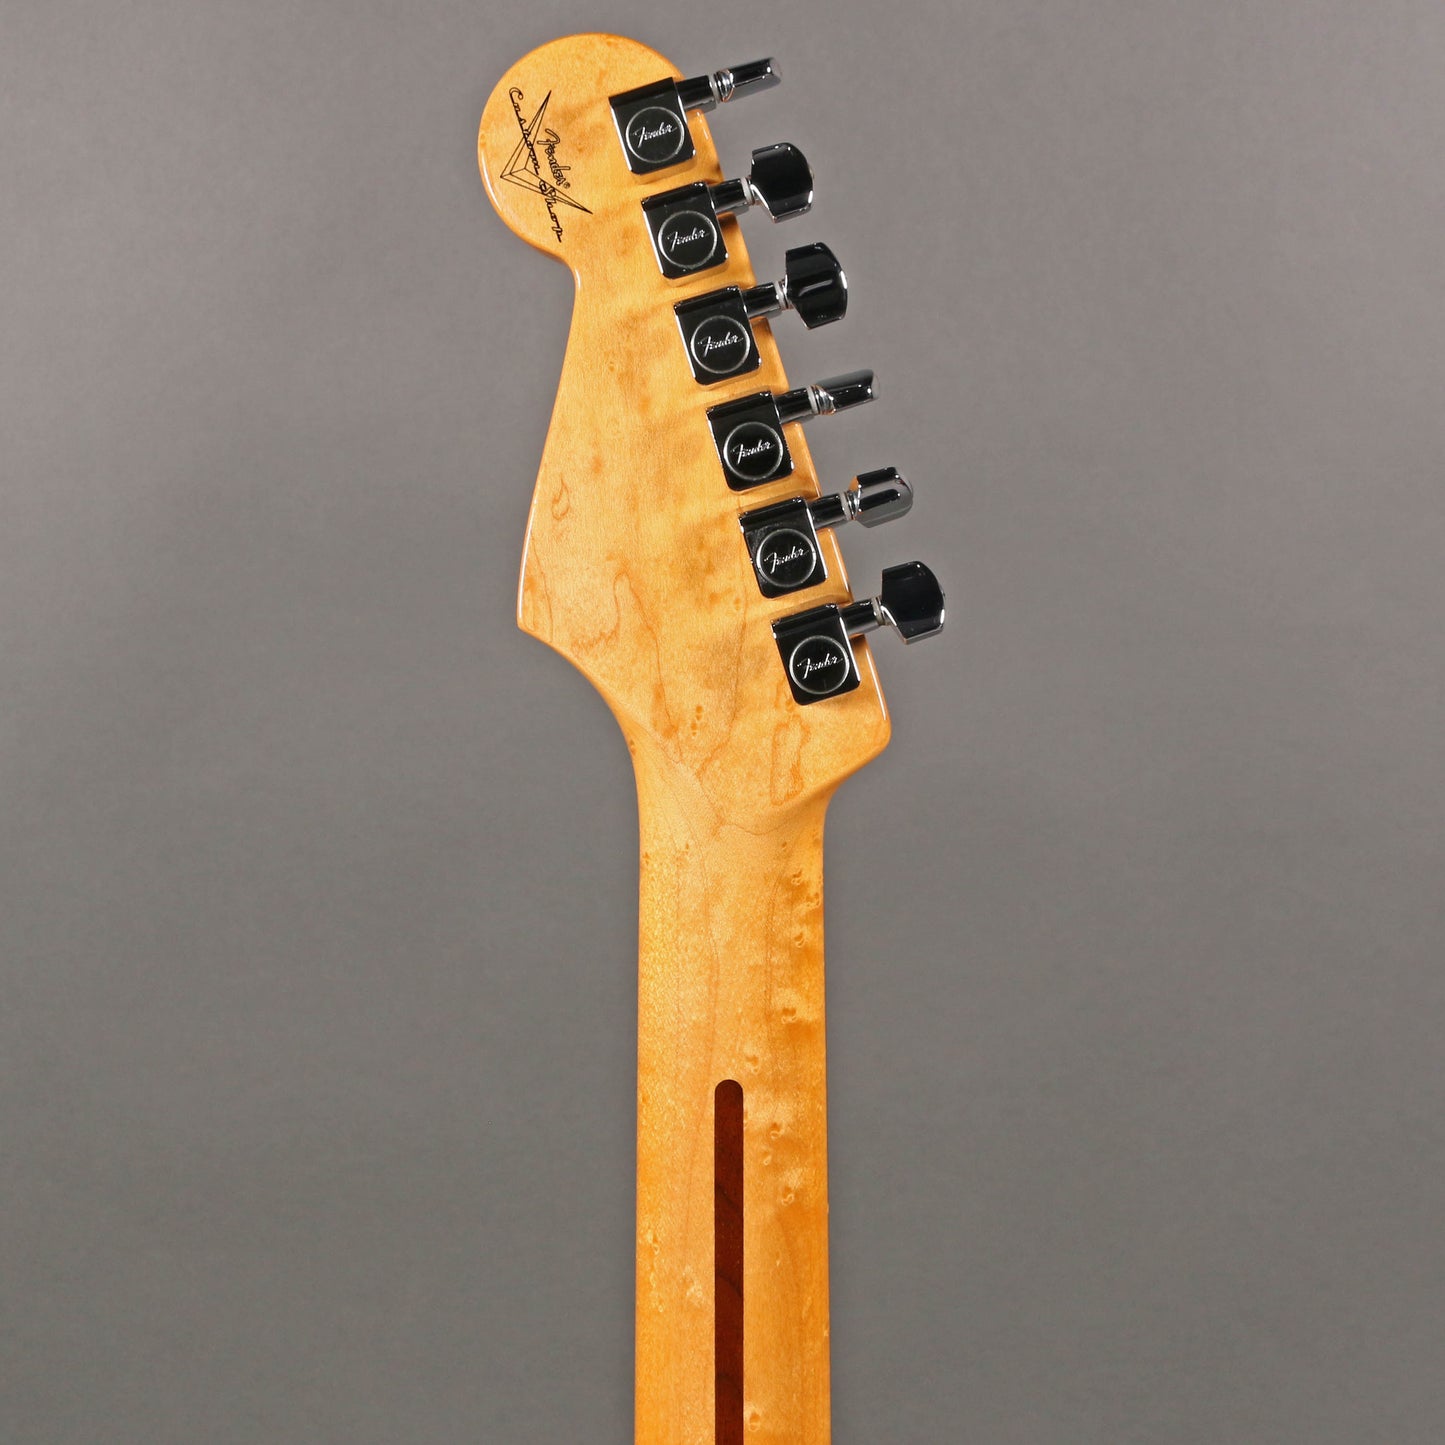 2012 Fender Custom Shop Custom Classic Stratocaster